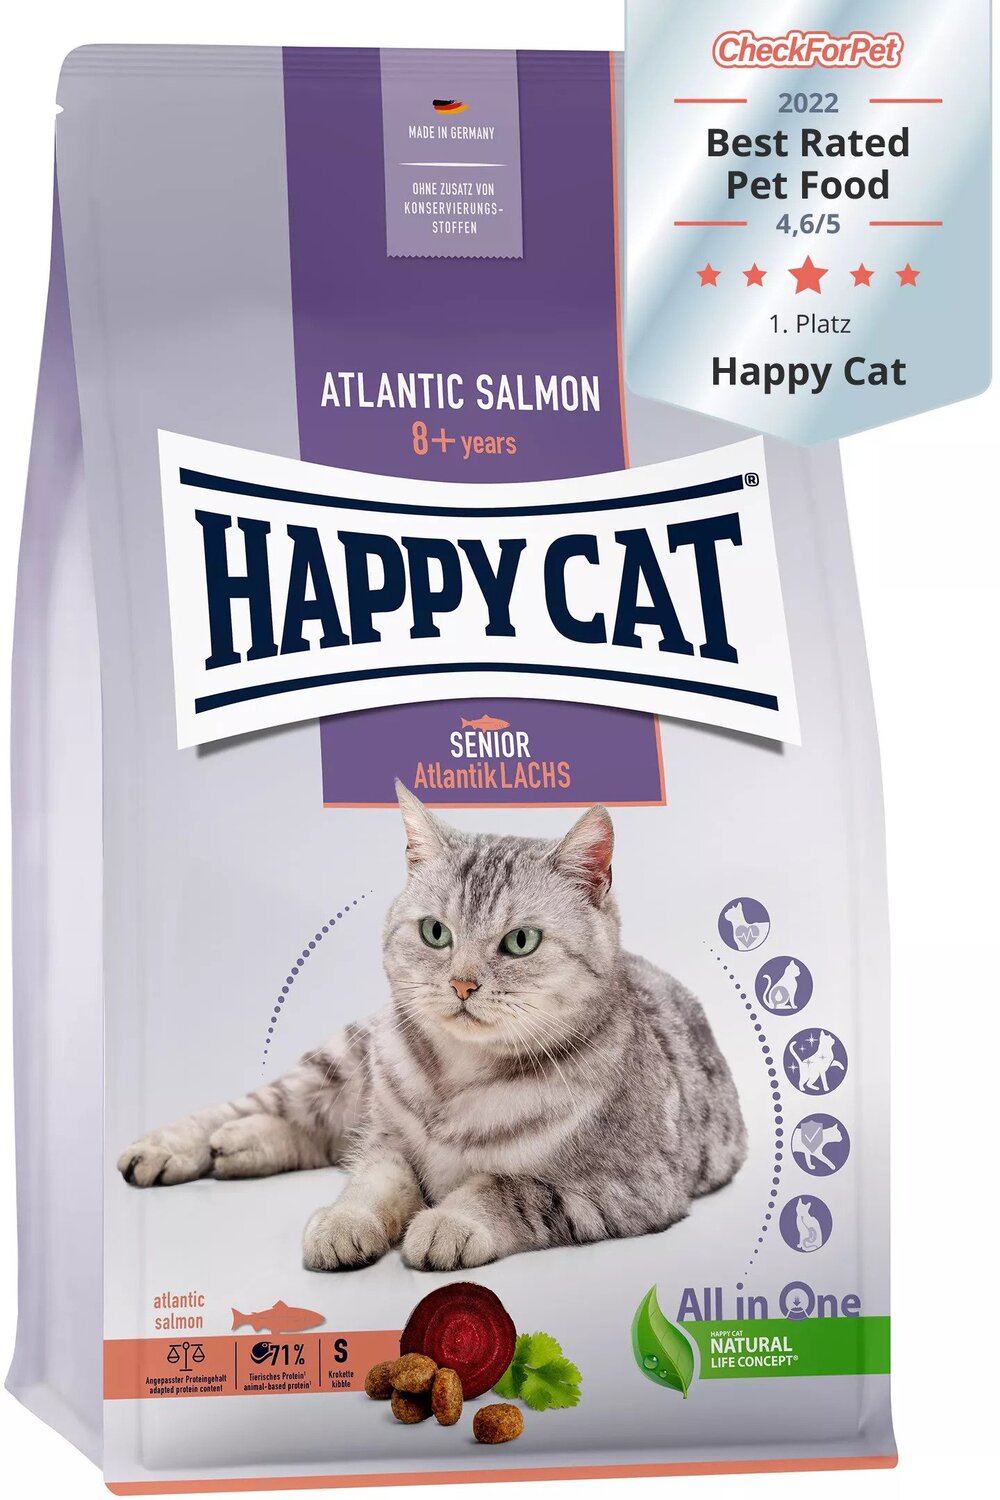 Happy Cat Senior Atlantic Salmon Atlantik Lachs